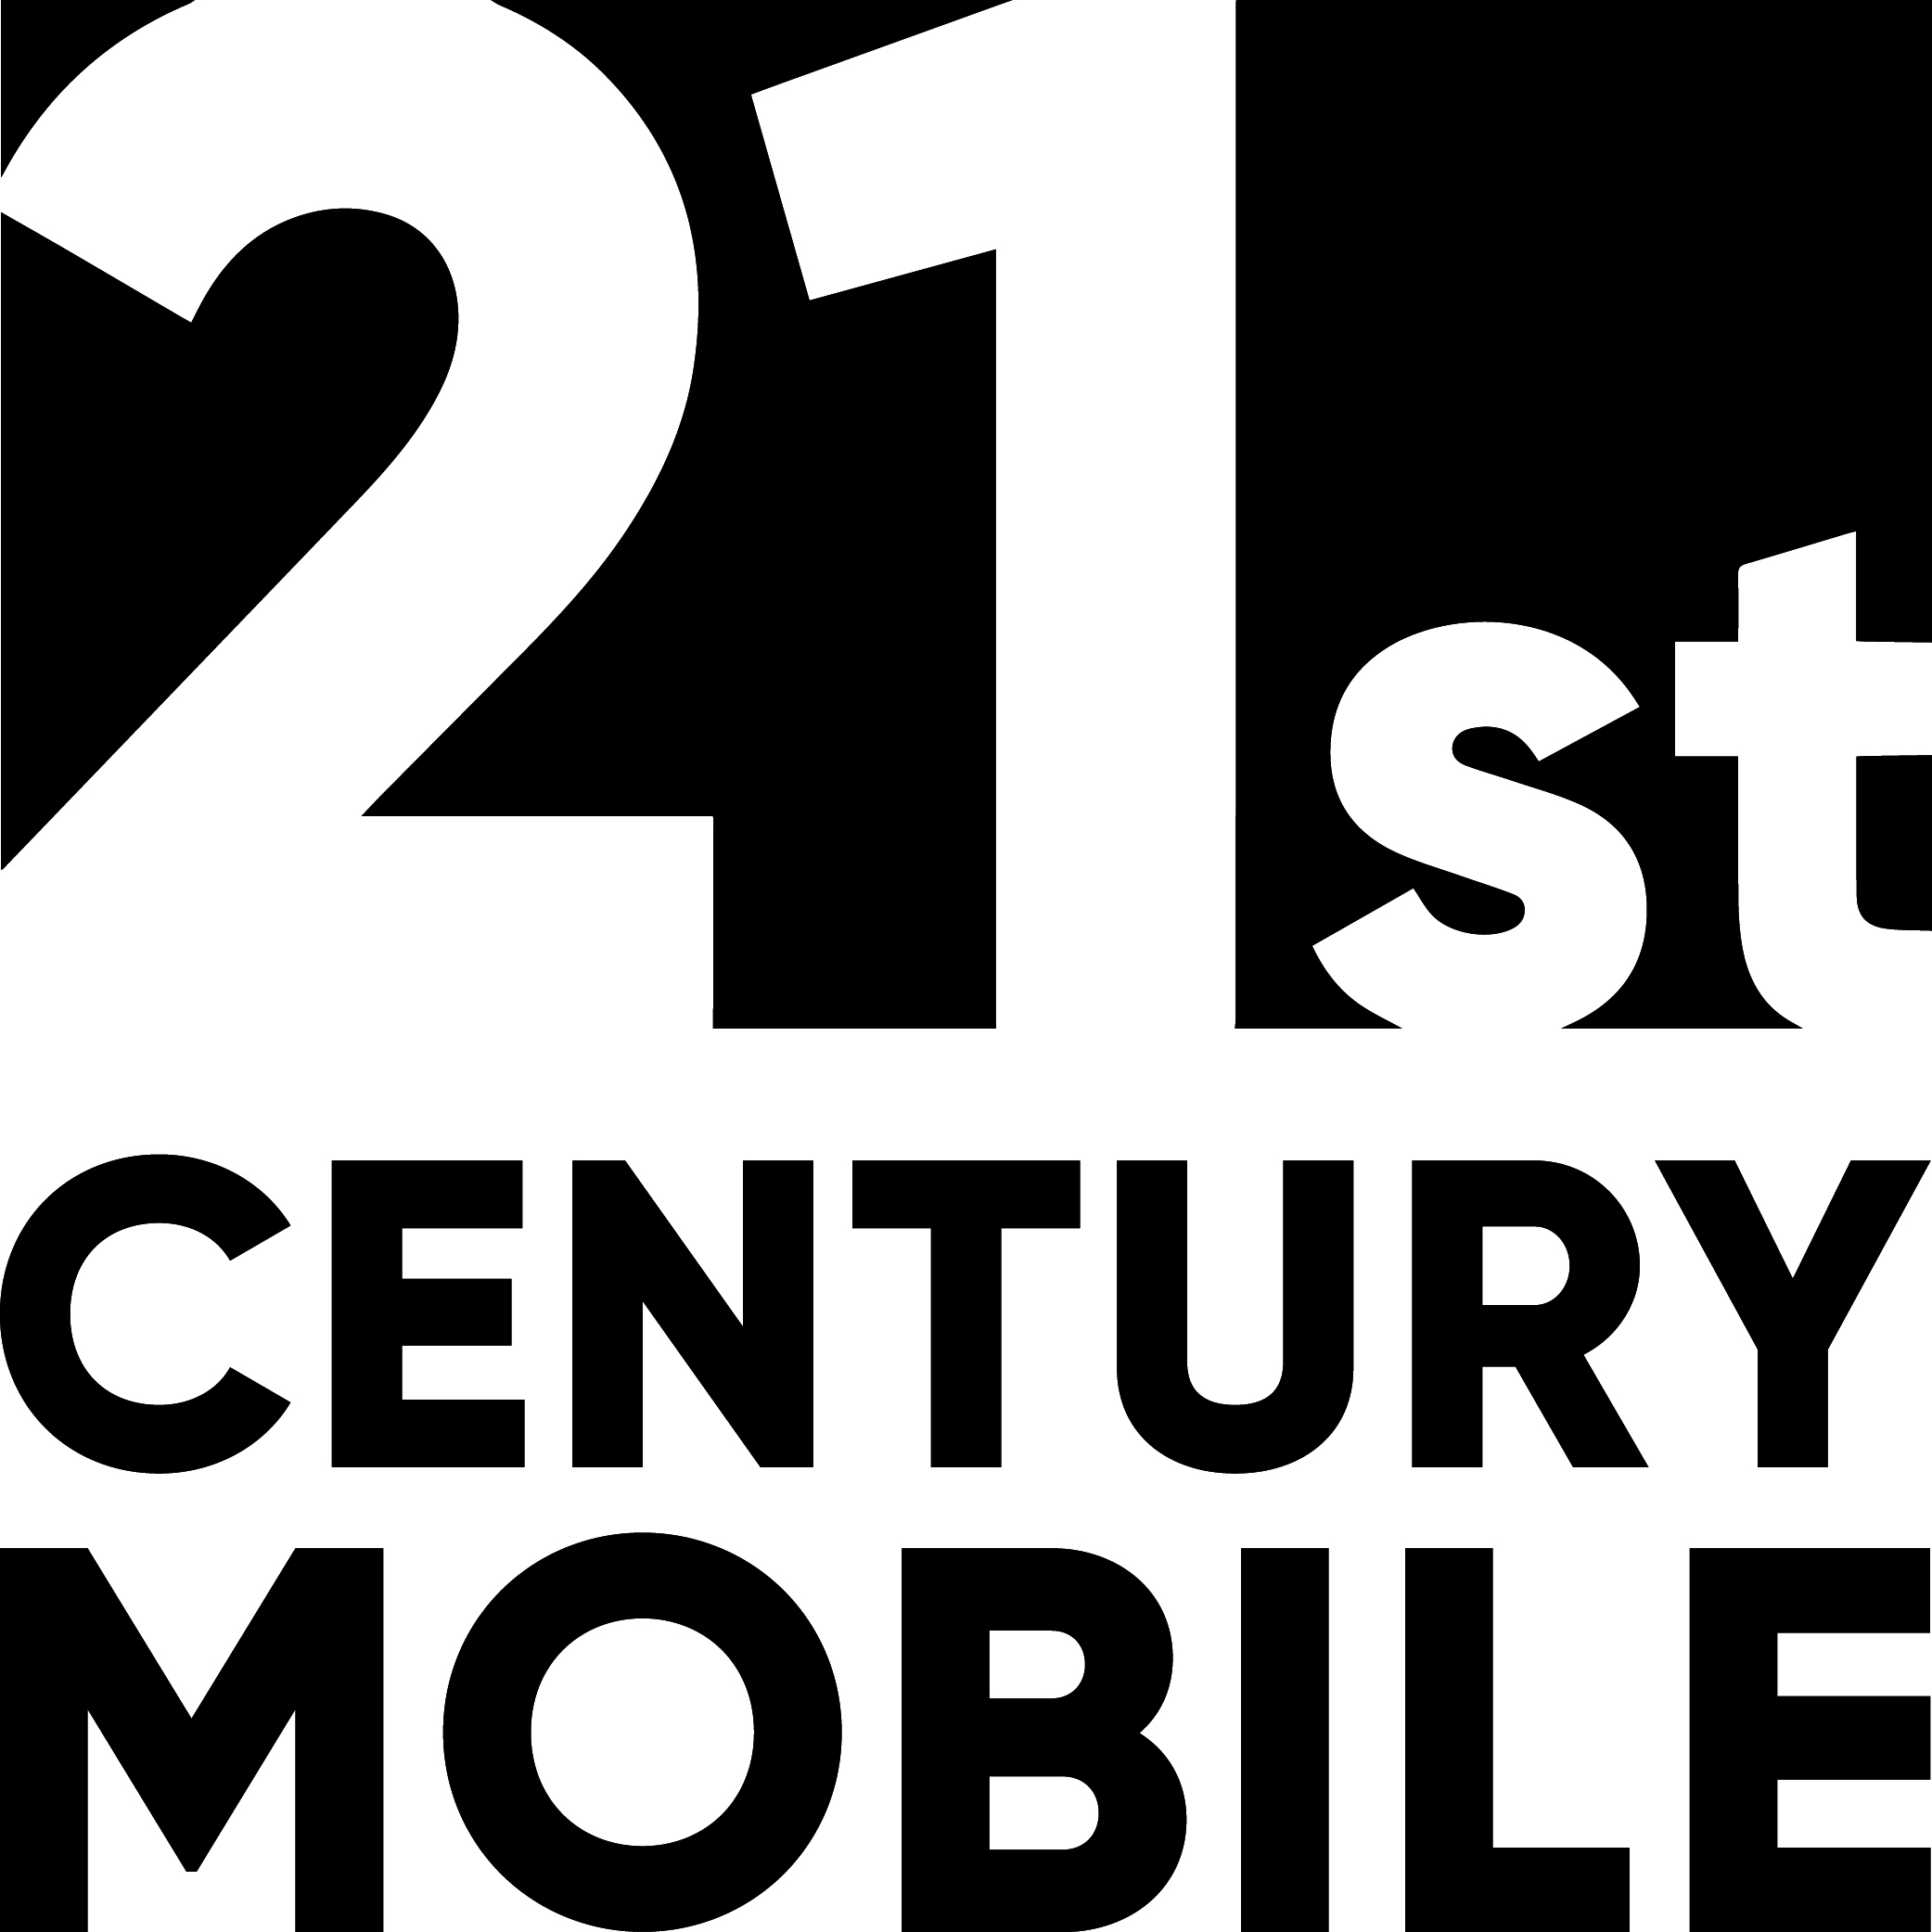 21st Century Mobile